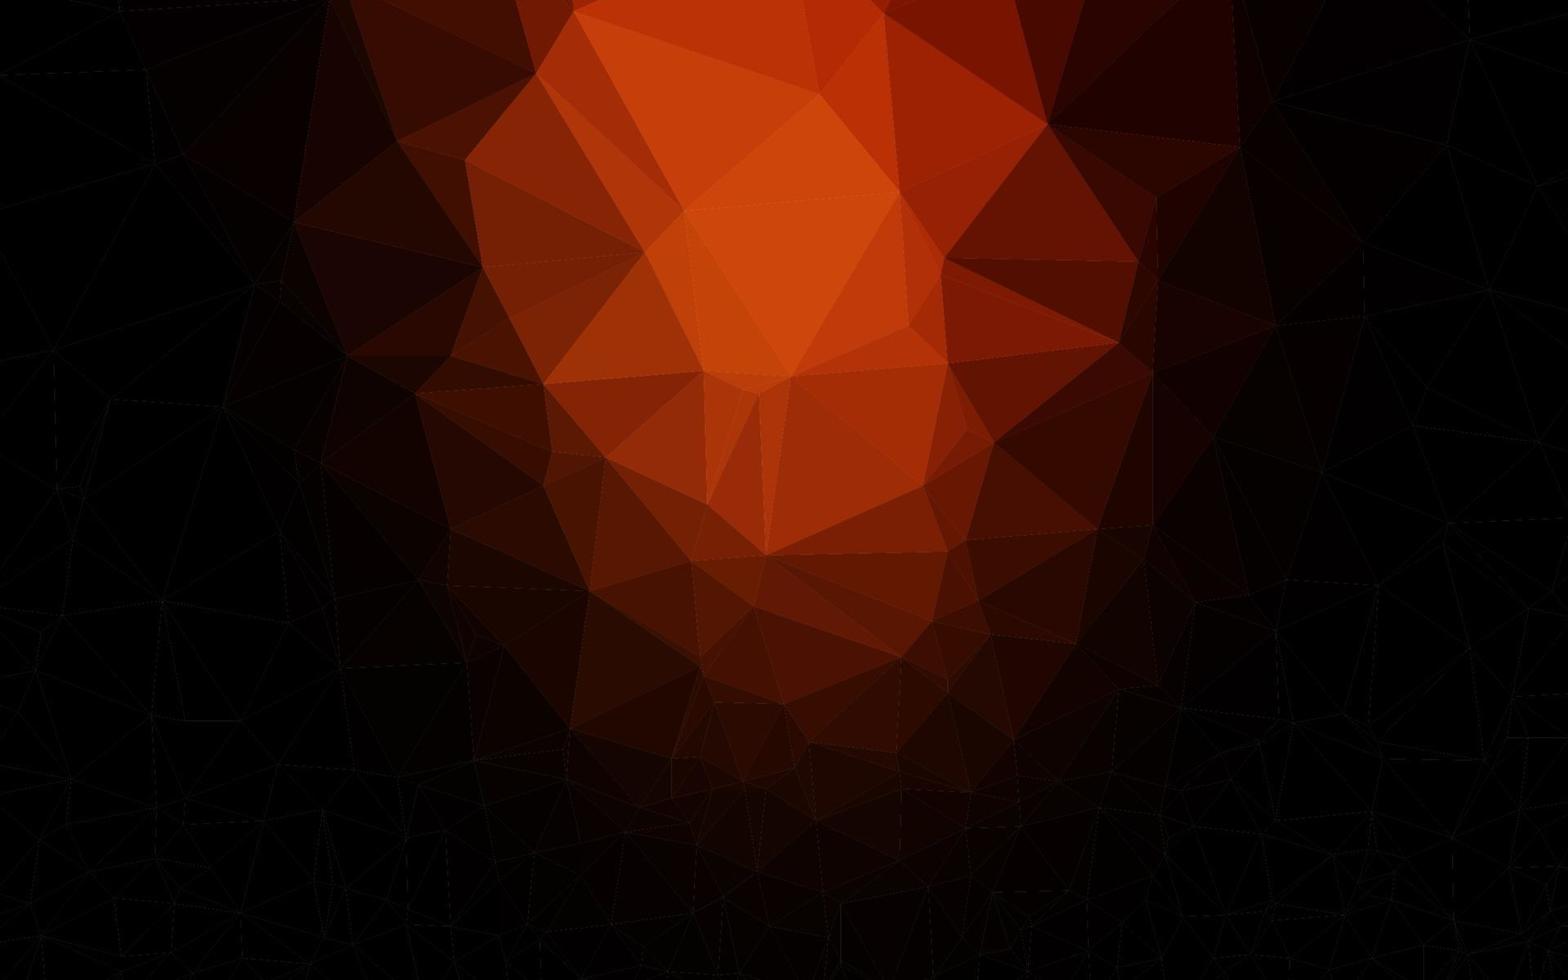 Dark Red vector shining triangular background.